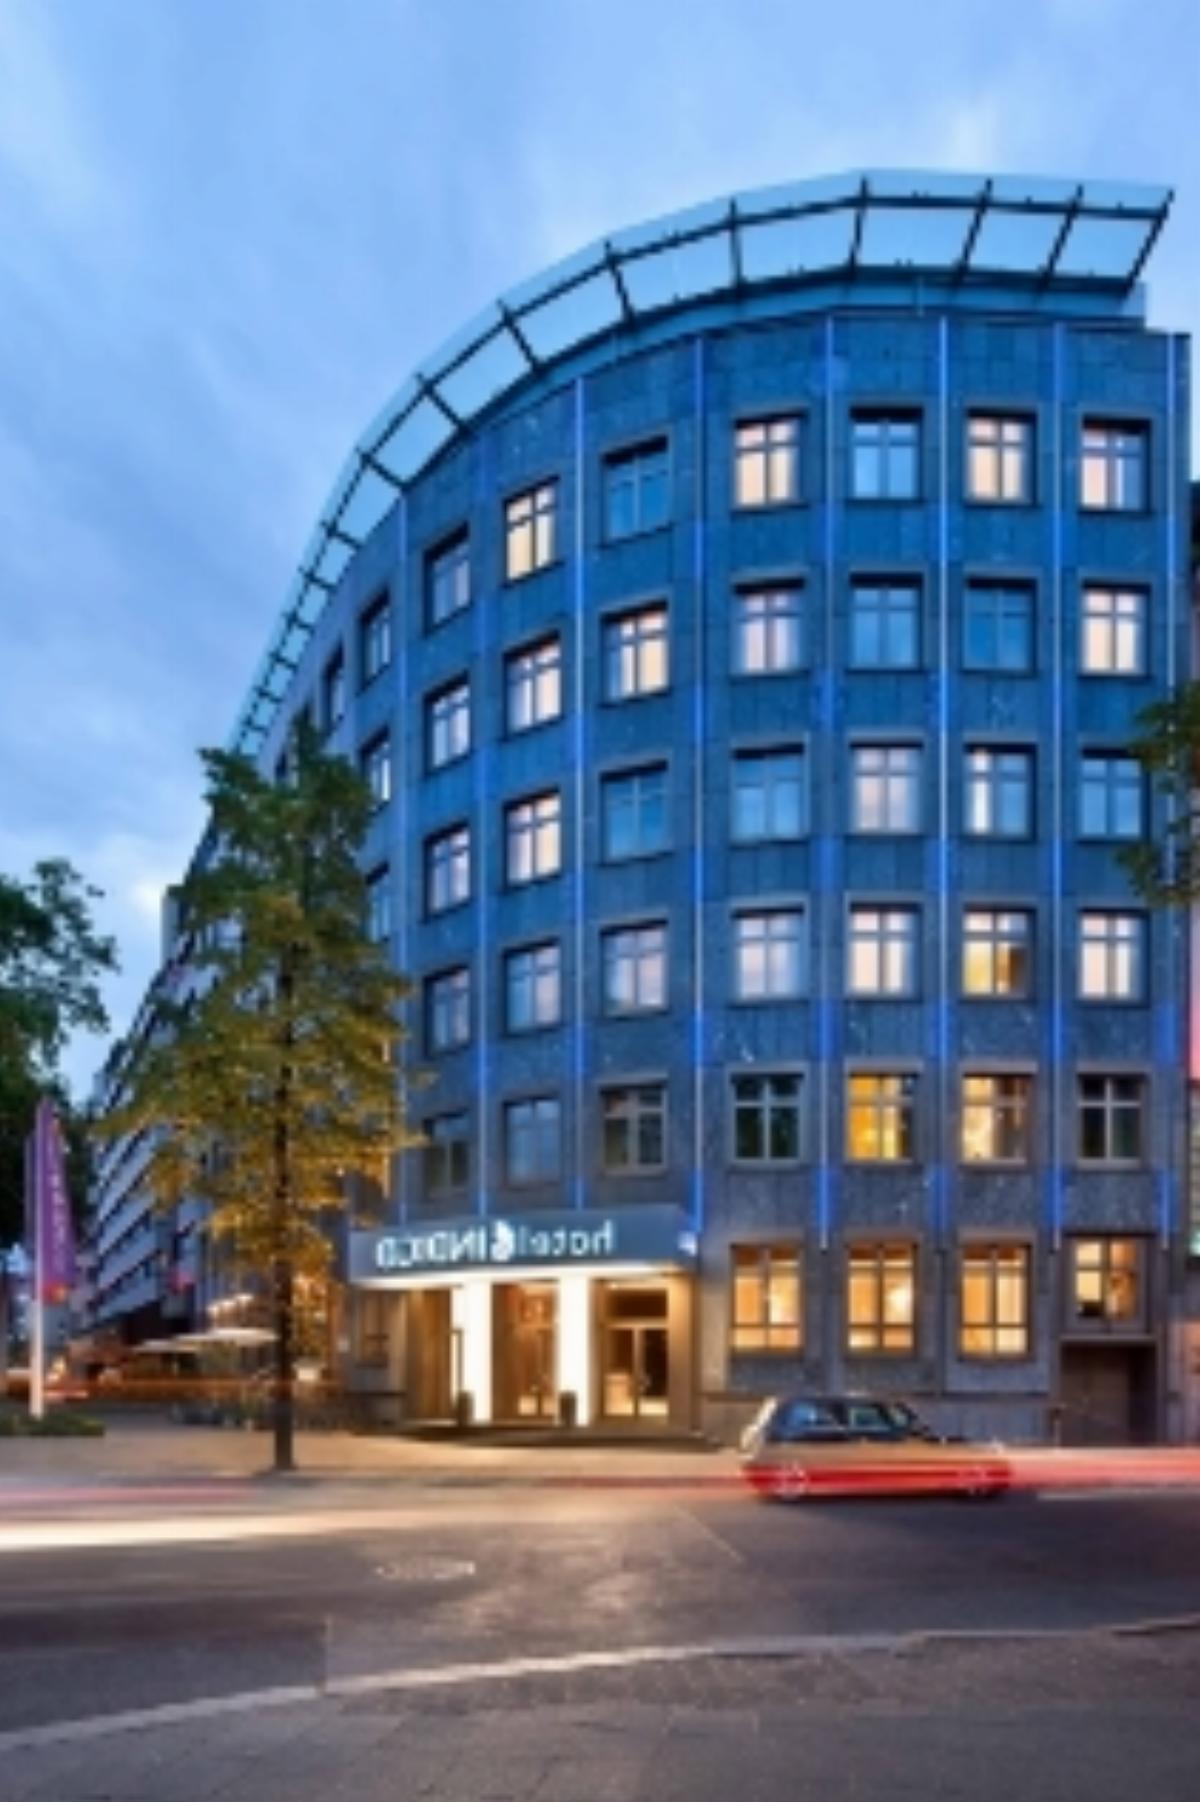 Hotel Indigo Berlin-Alexanderplatz Hotel Berlin Germany